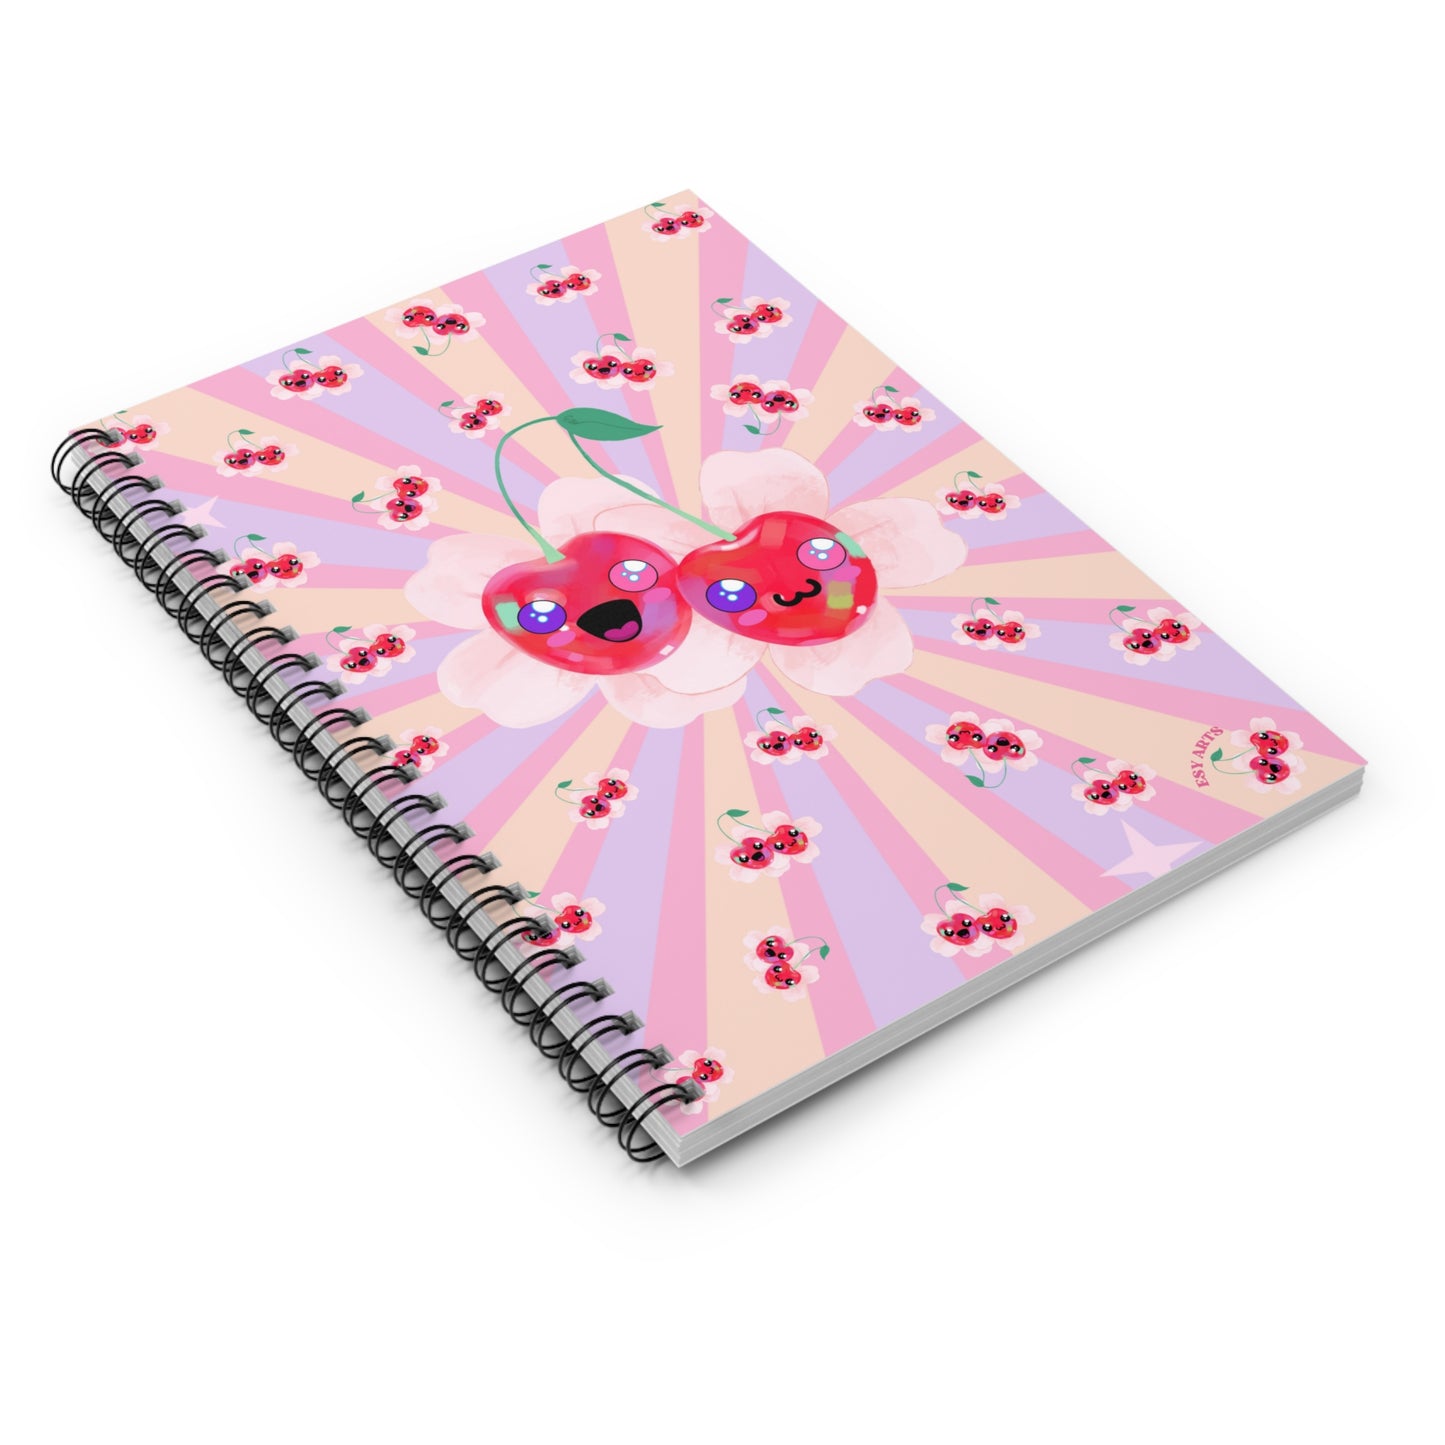 Cherry Blossom - Spiral Notebook